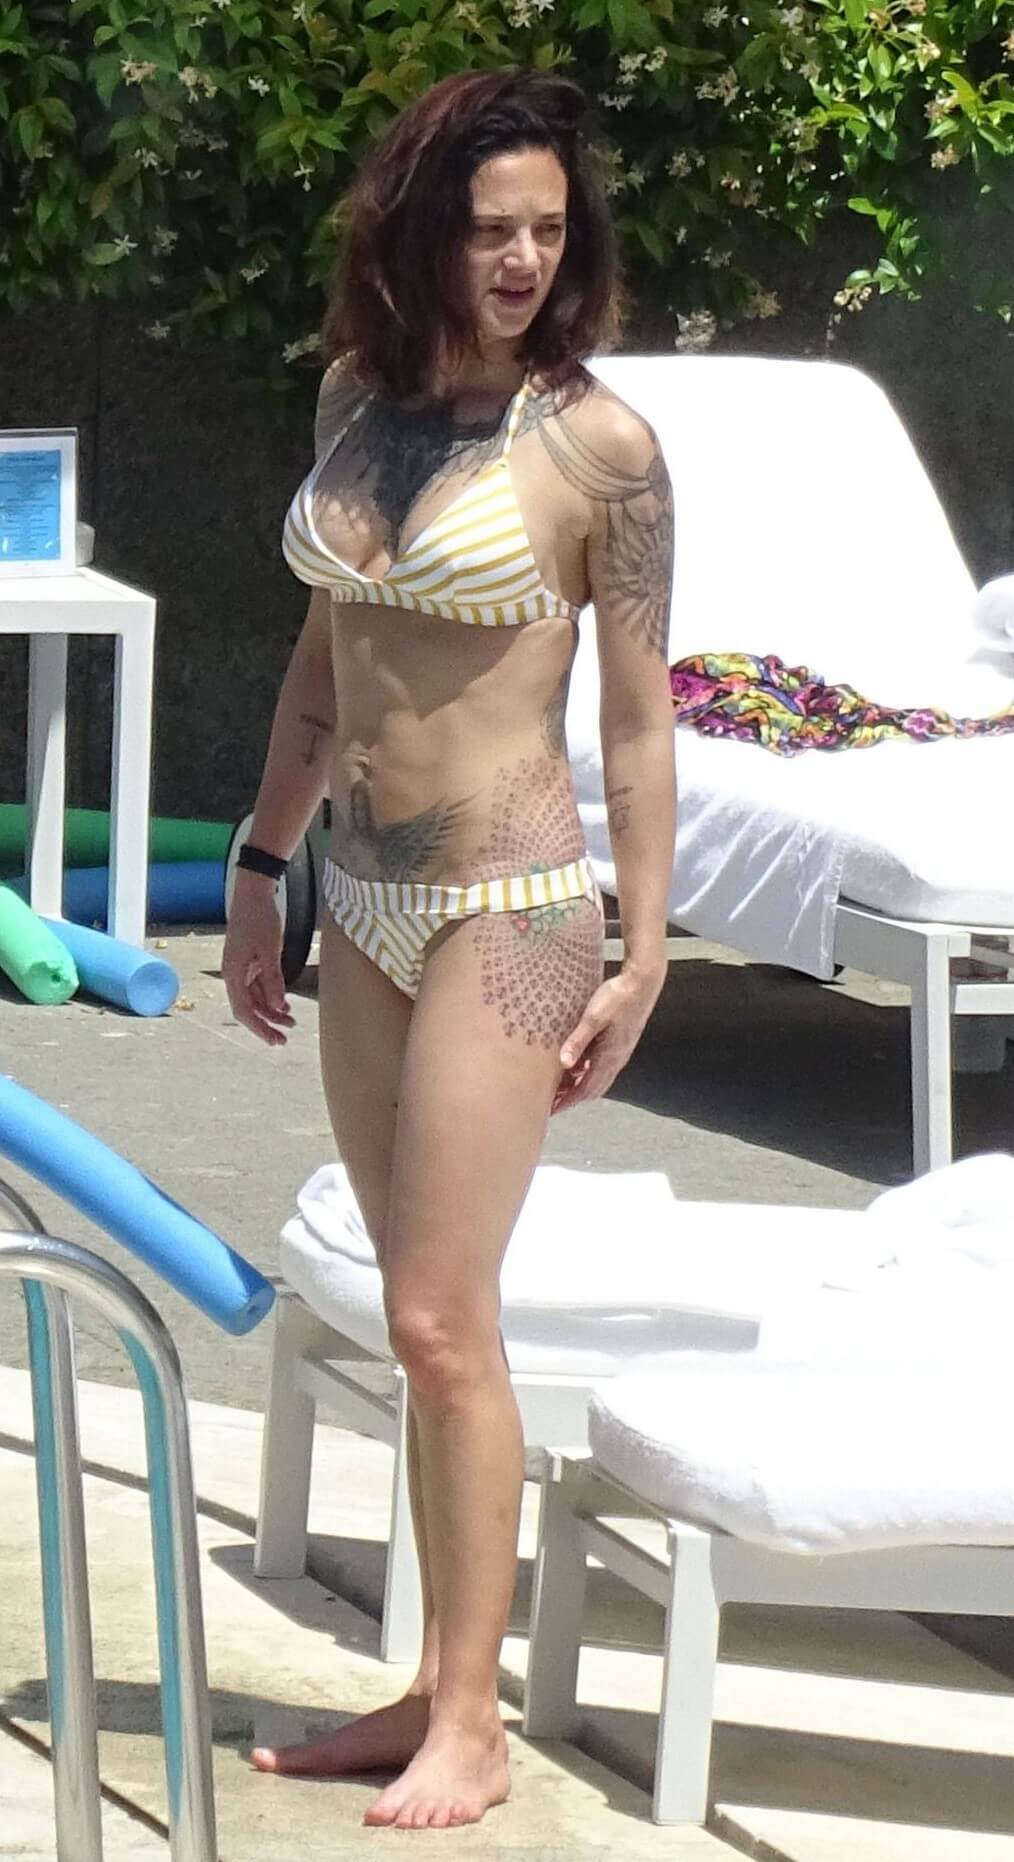 Asia Argento In Yellow Striped Bikini at the Hotel Hilton’s Swimming Pool in Rome